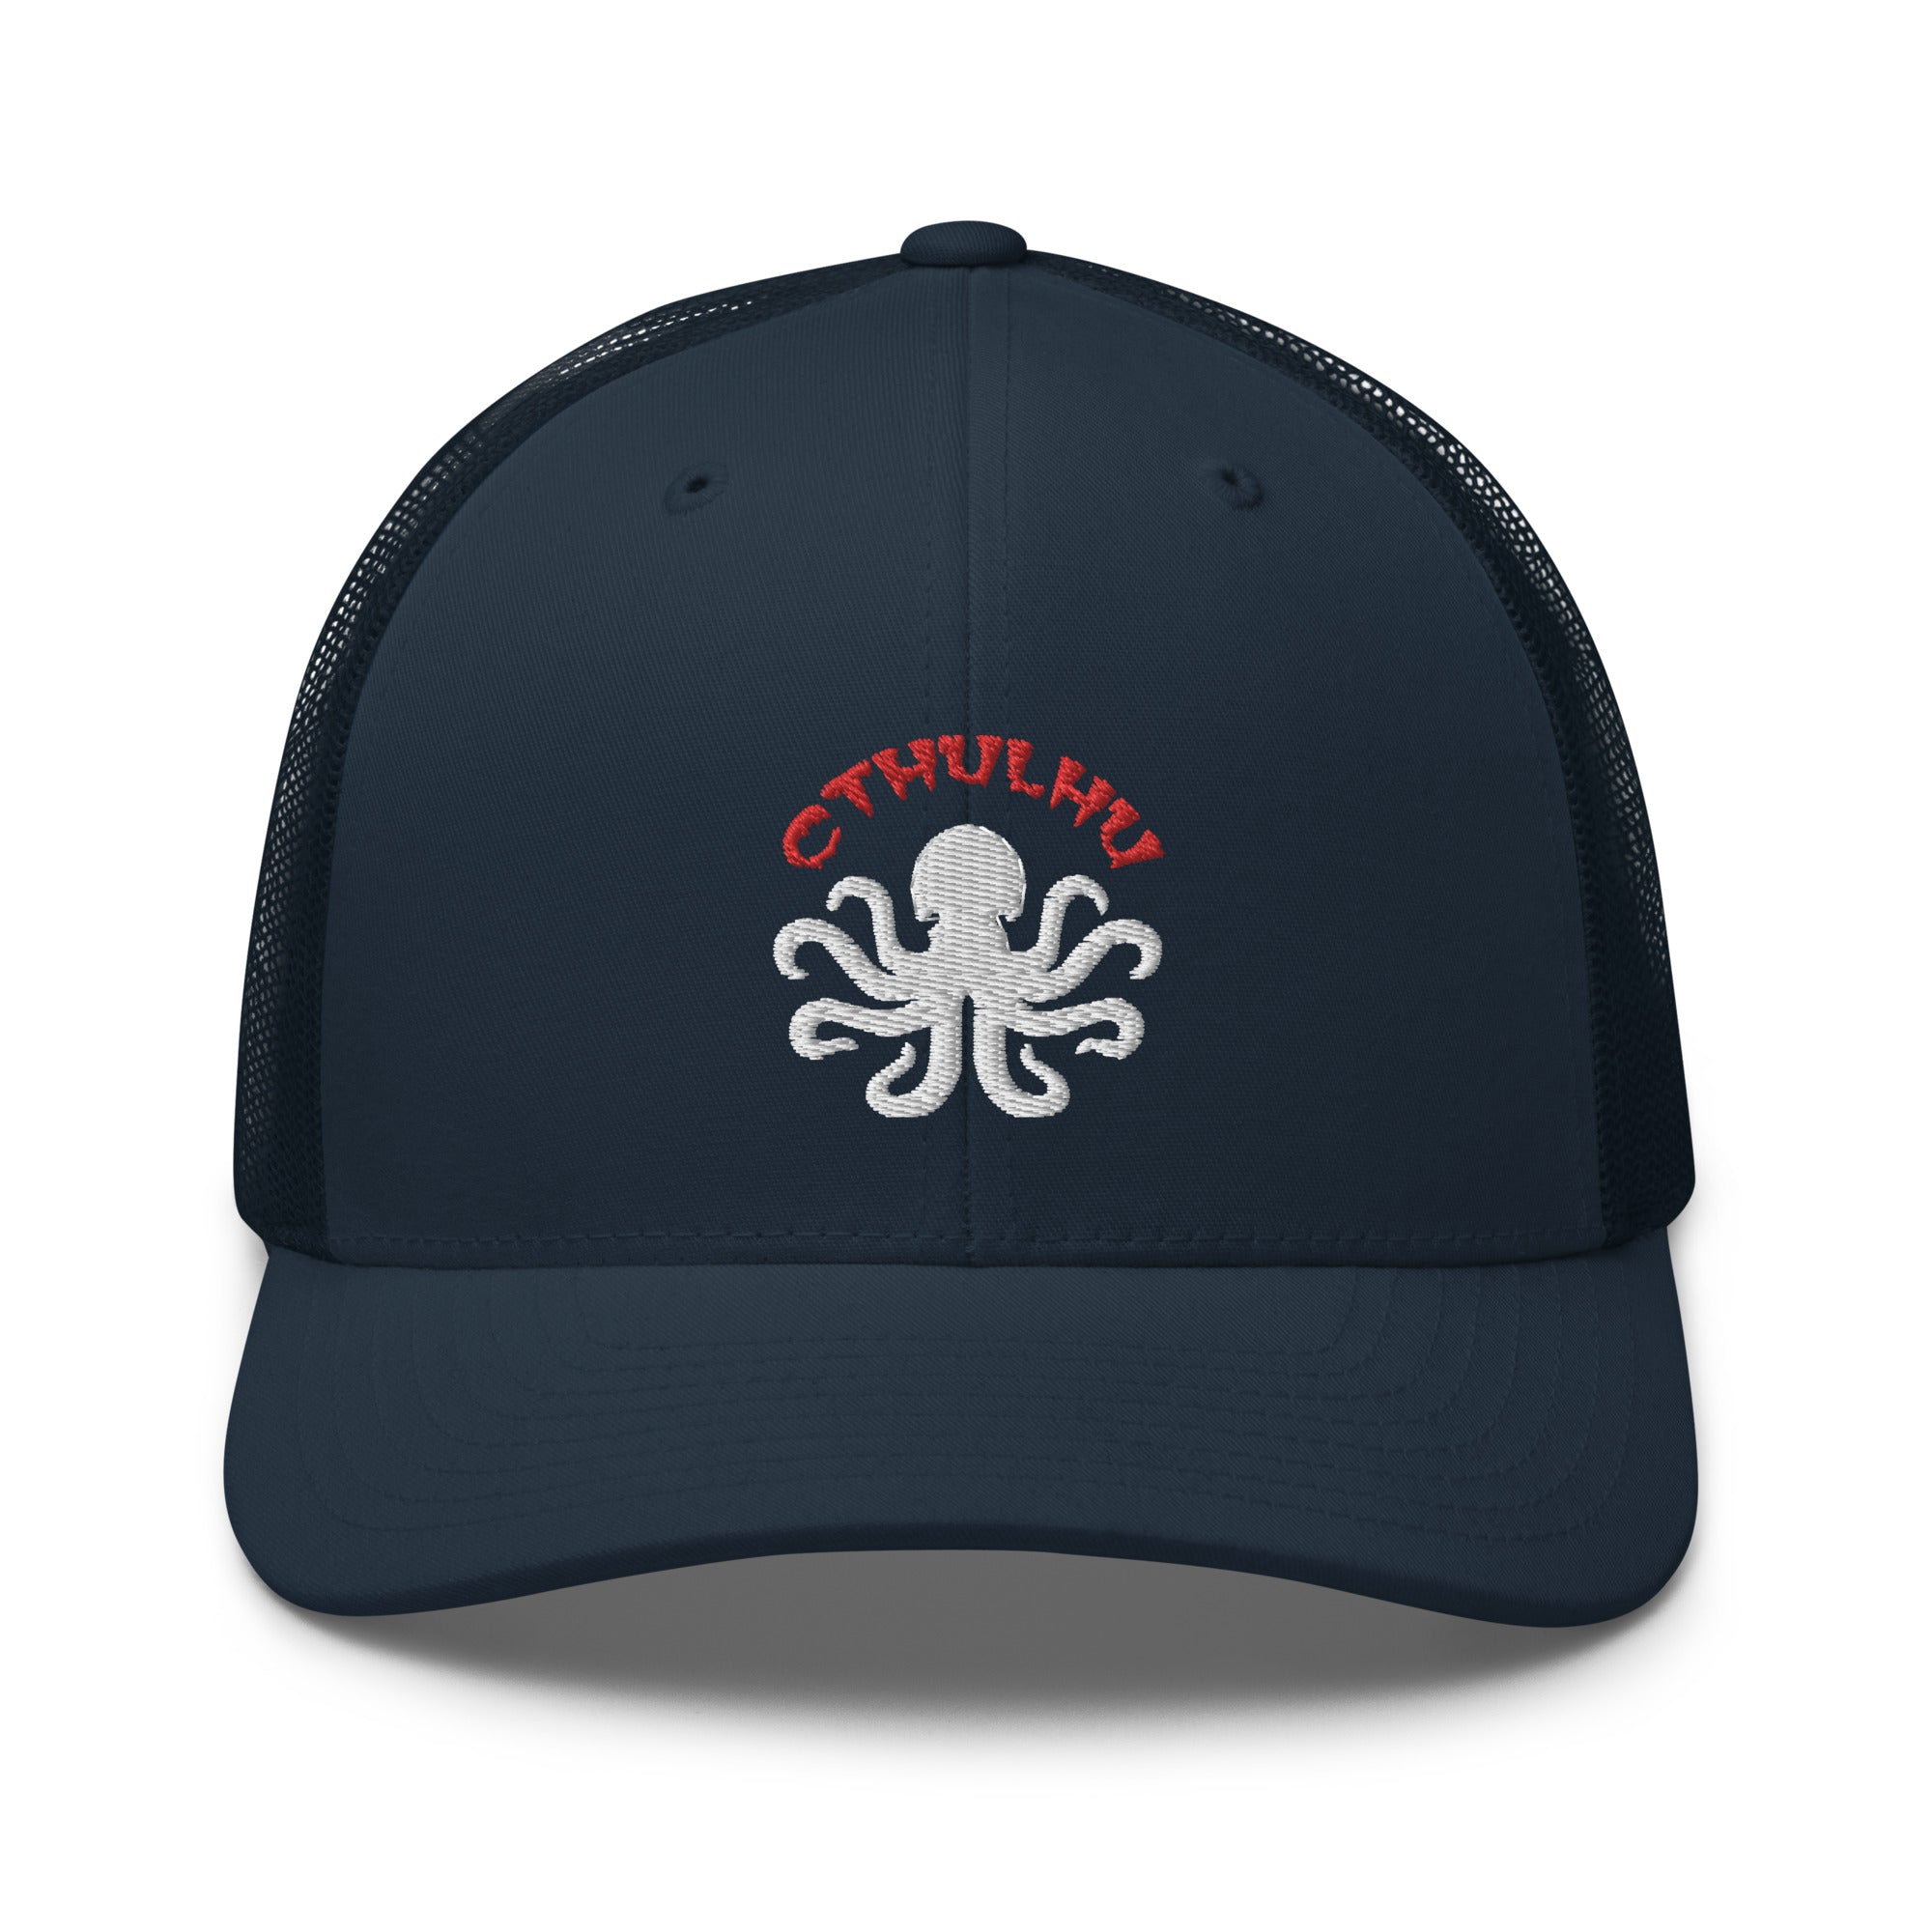 Cthulhu The Elder Gods Embroidered Retro Trucker Cap Snapback Hat